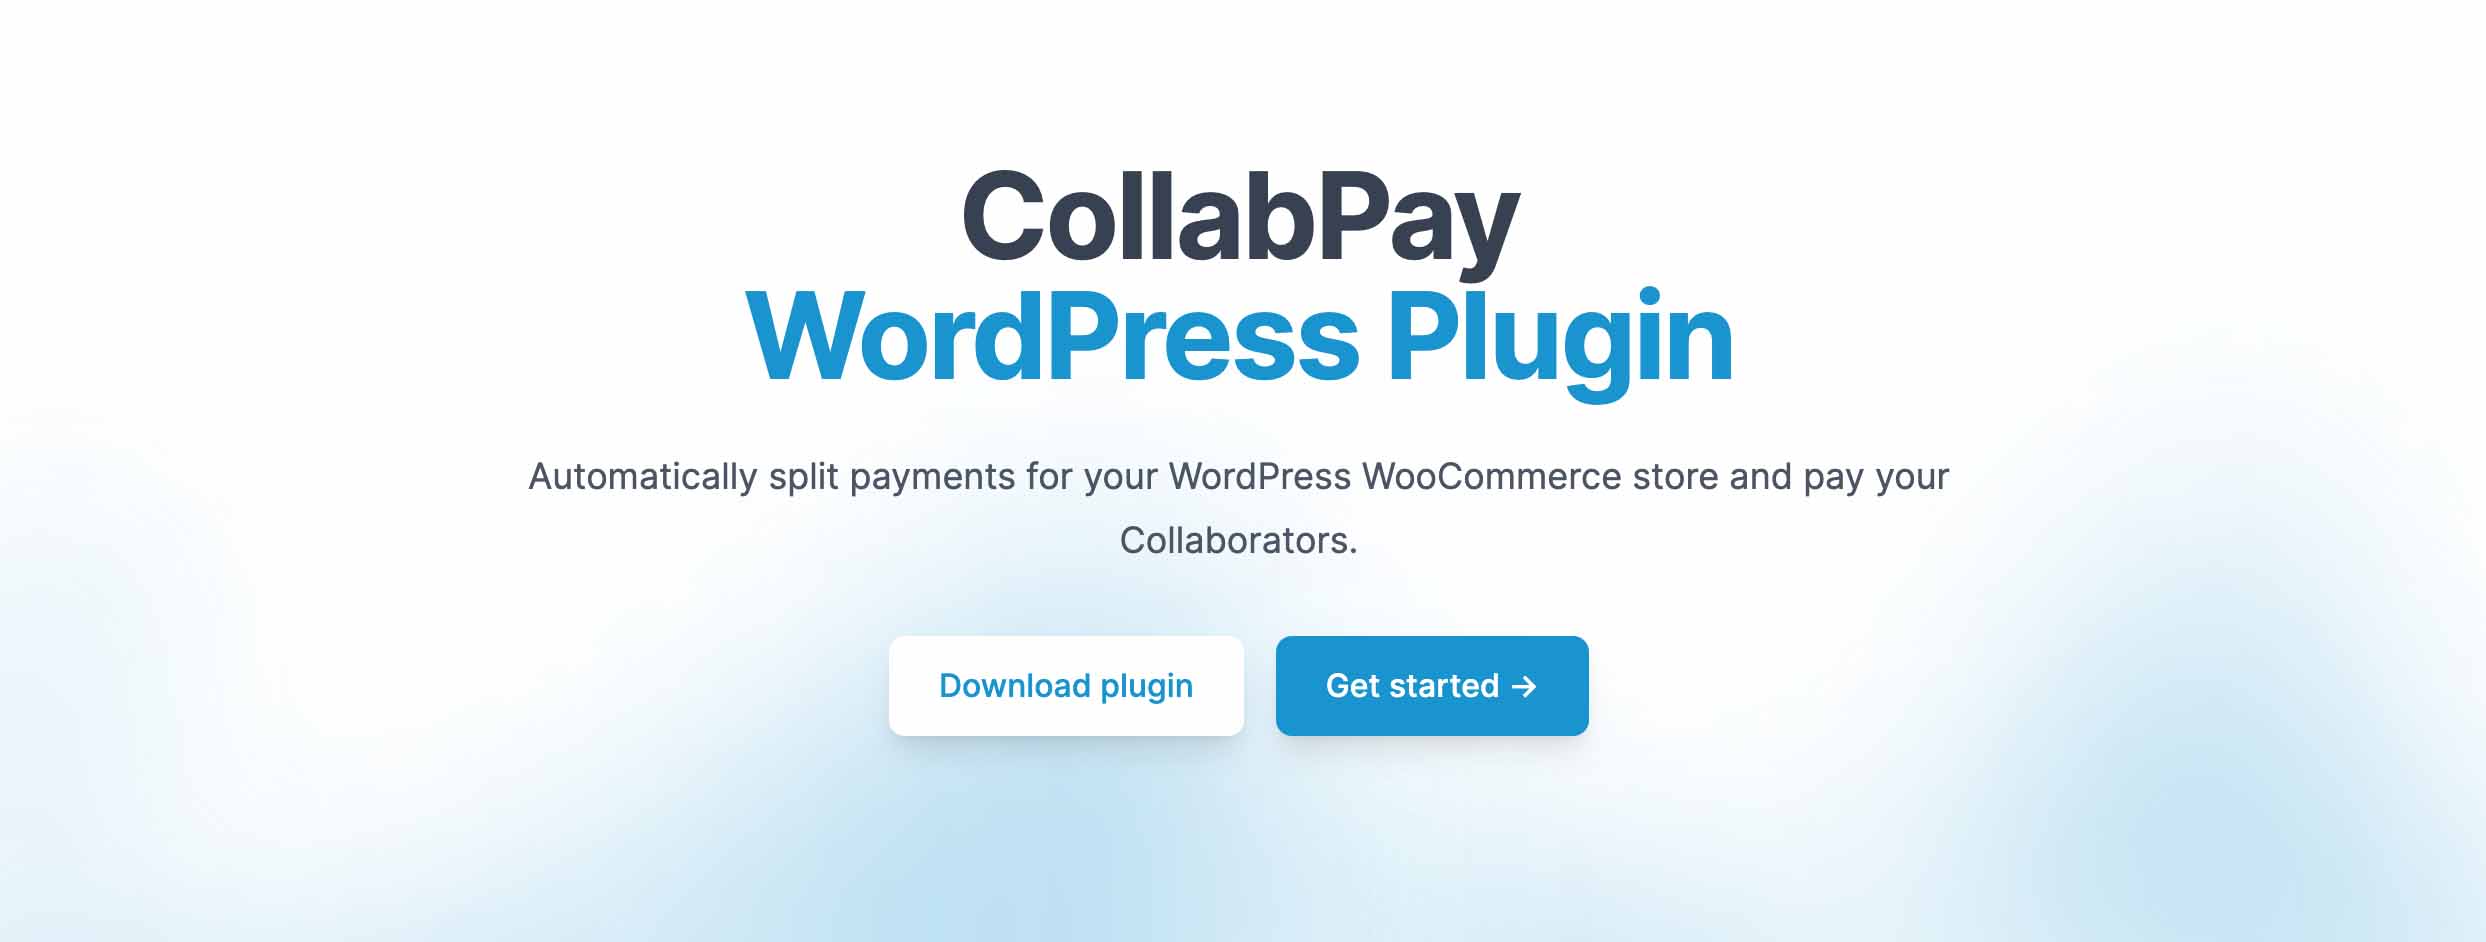 collabpay wordpress